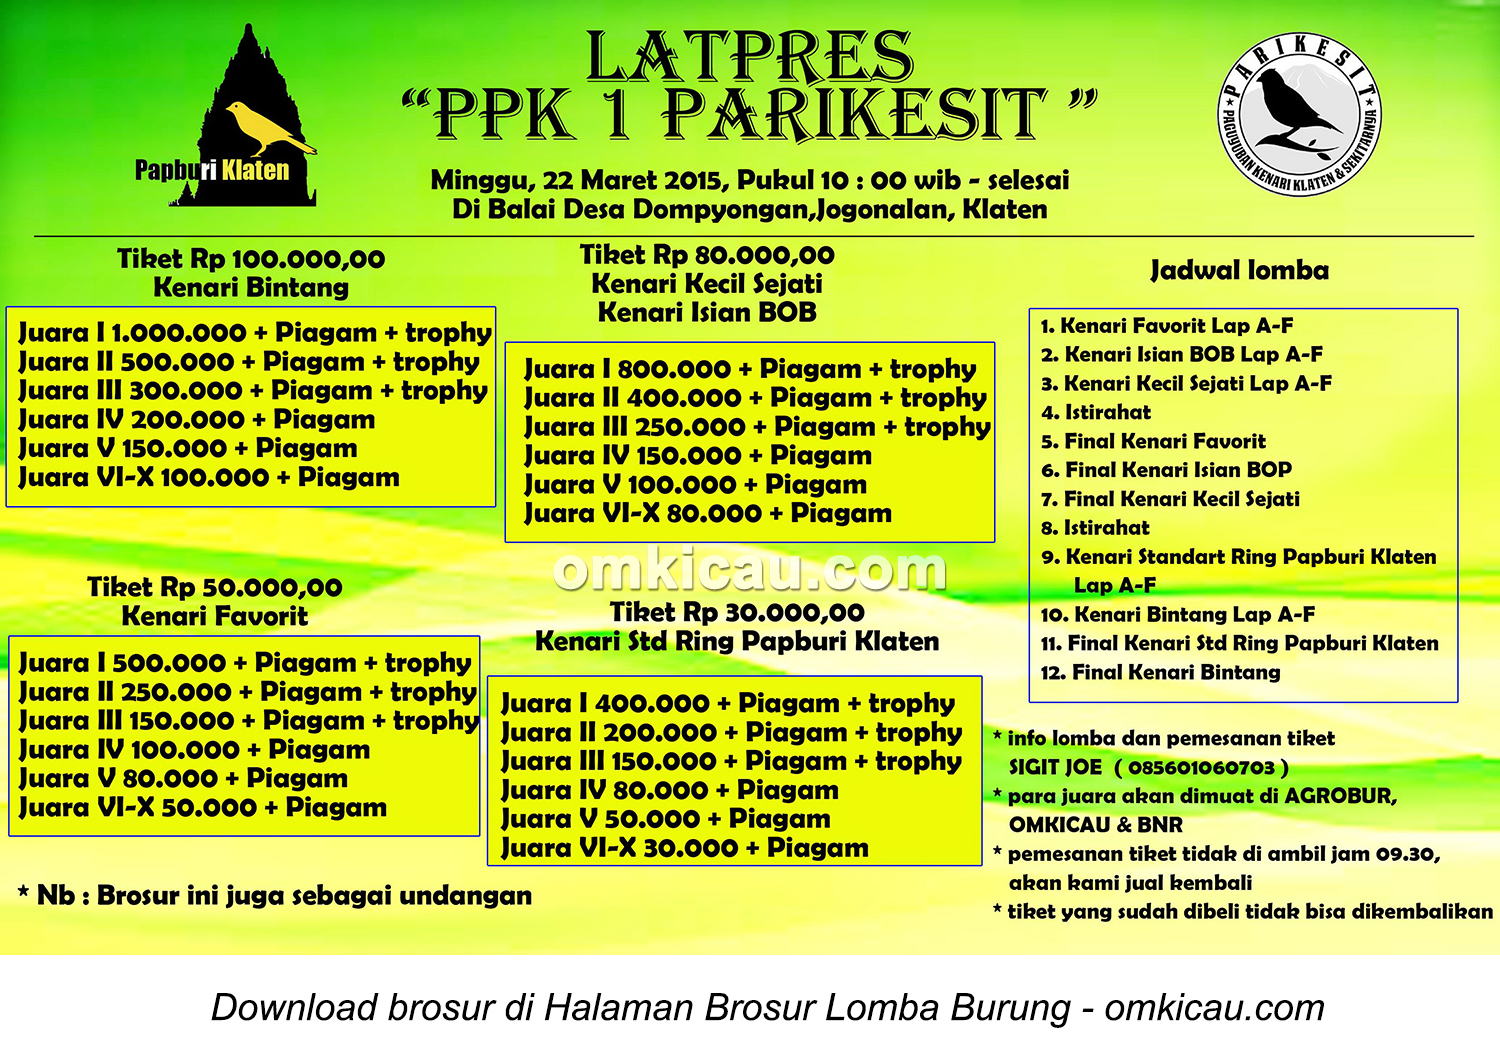 Brosur Latpres PPK-1 Parikesit Klaten, 22 Maret 2015